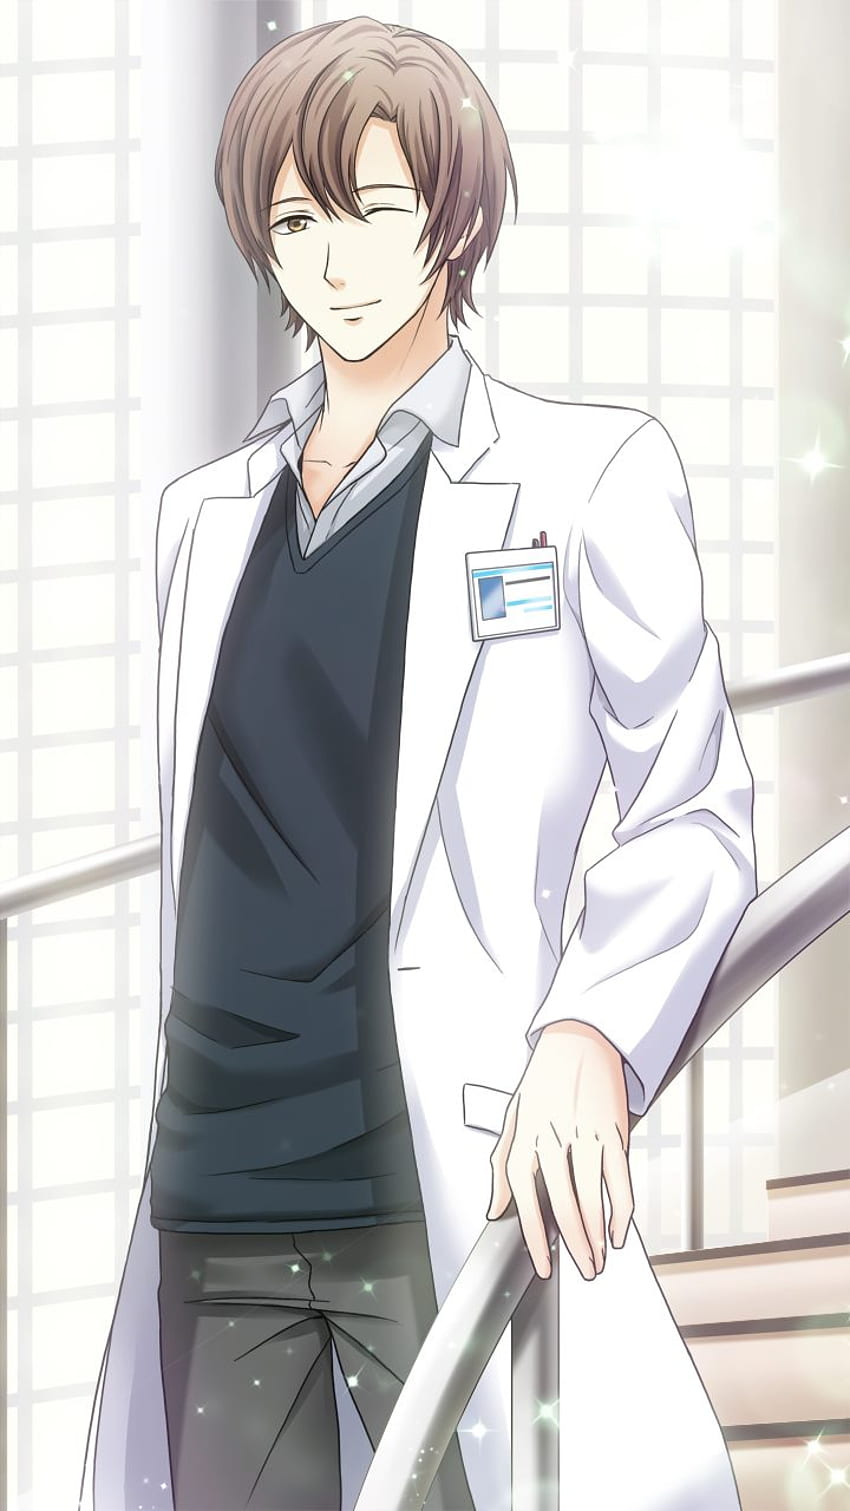 Stethoscope - Hospital | page 2 of 23 - Zerochan Anime Image Board